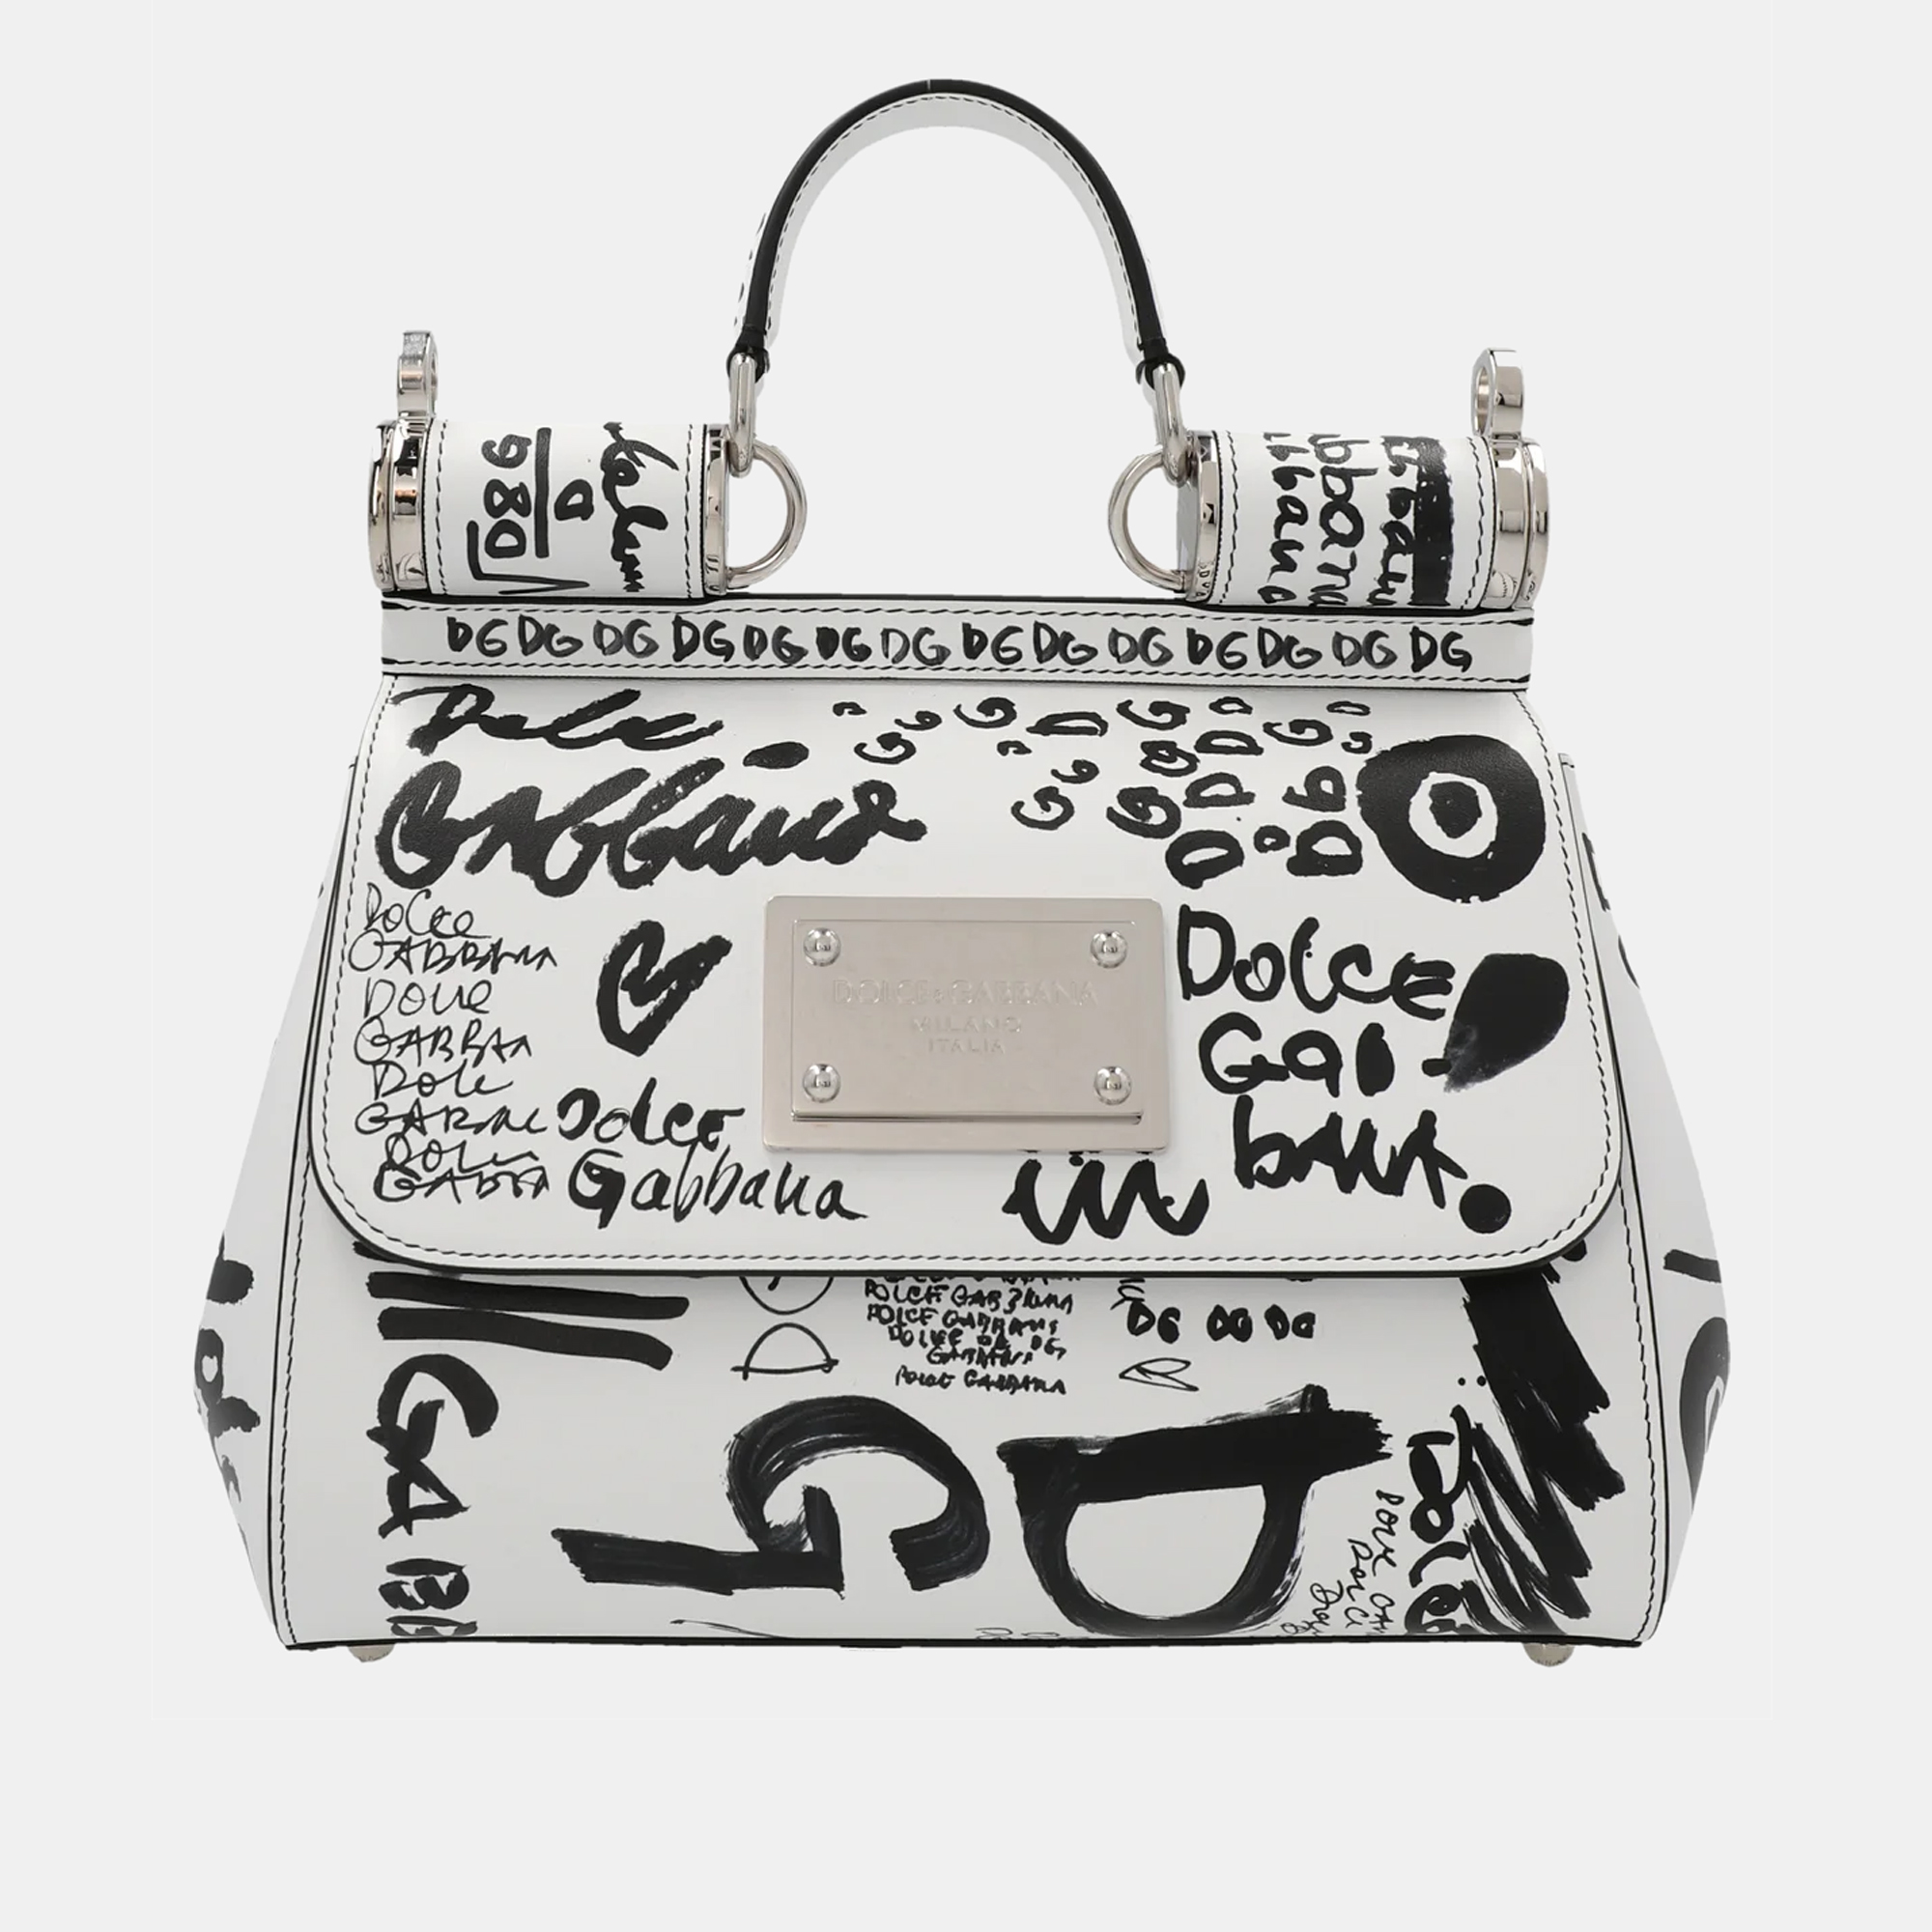 Dolce & Gabbana Black & White - Leather - Logo Printed Top Handle Bag